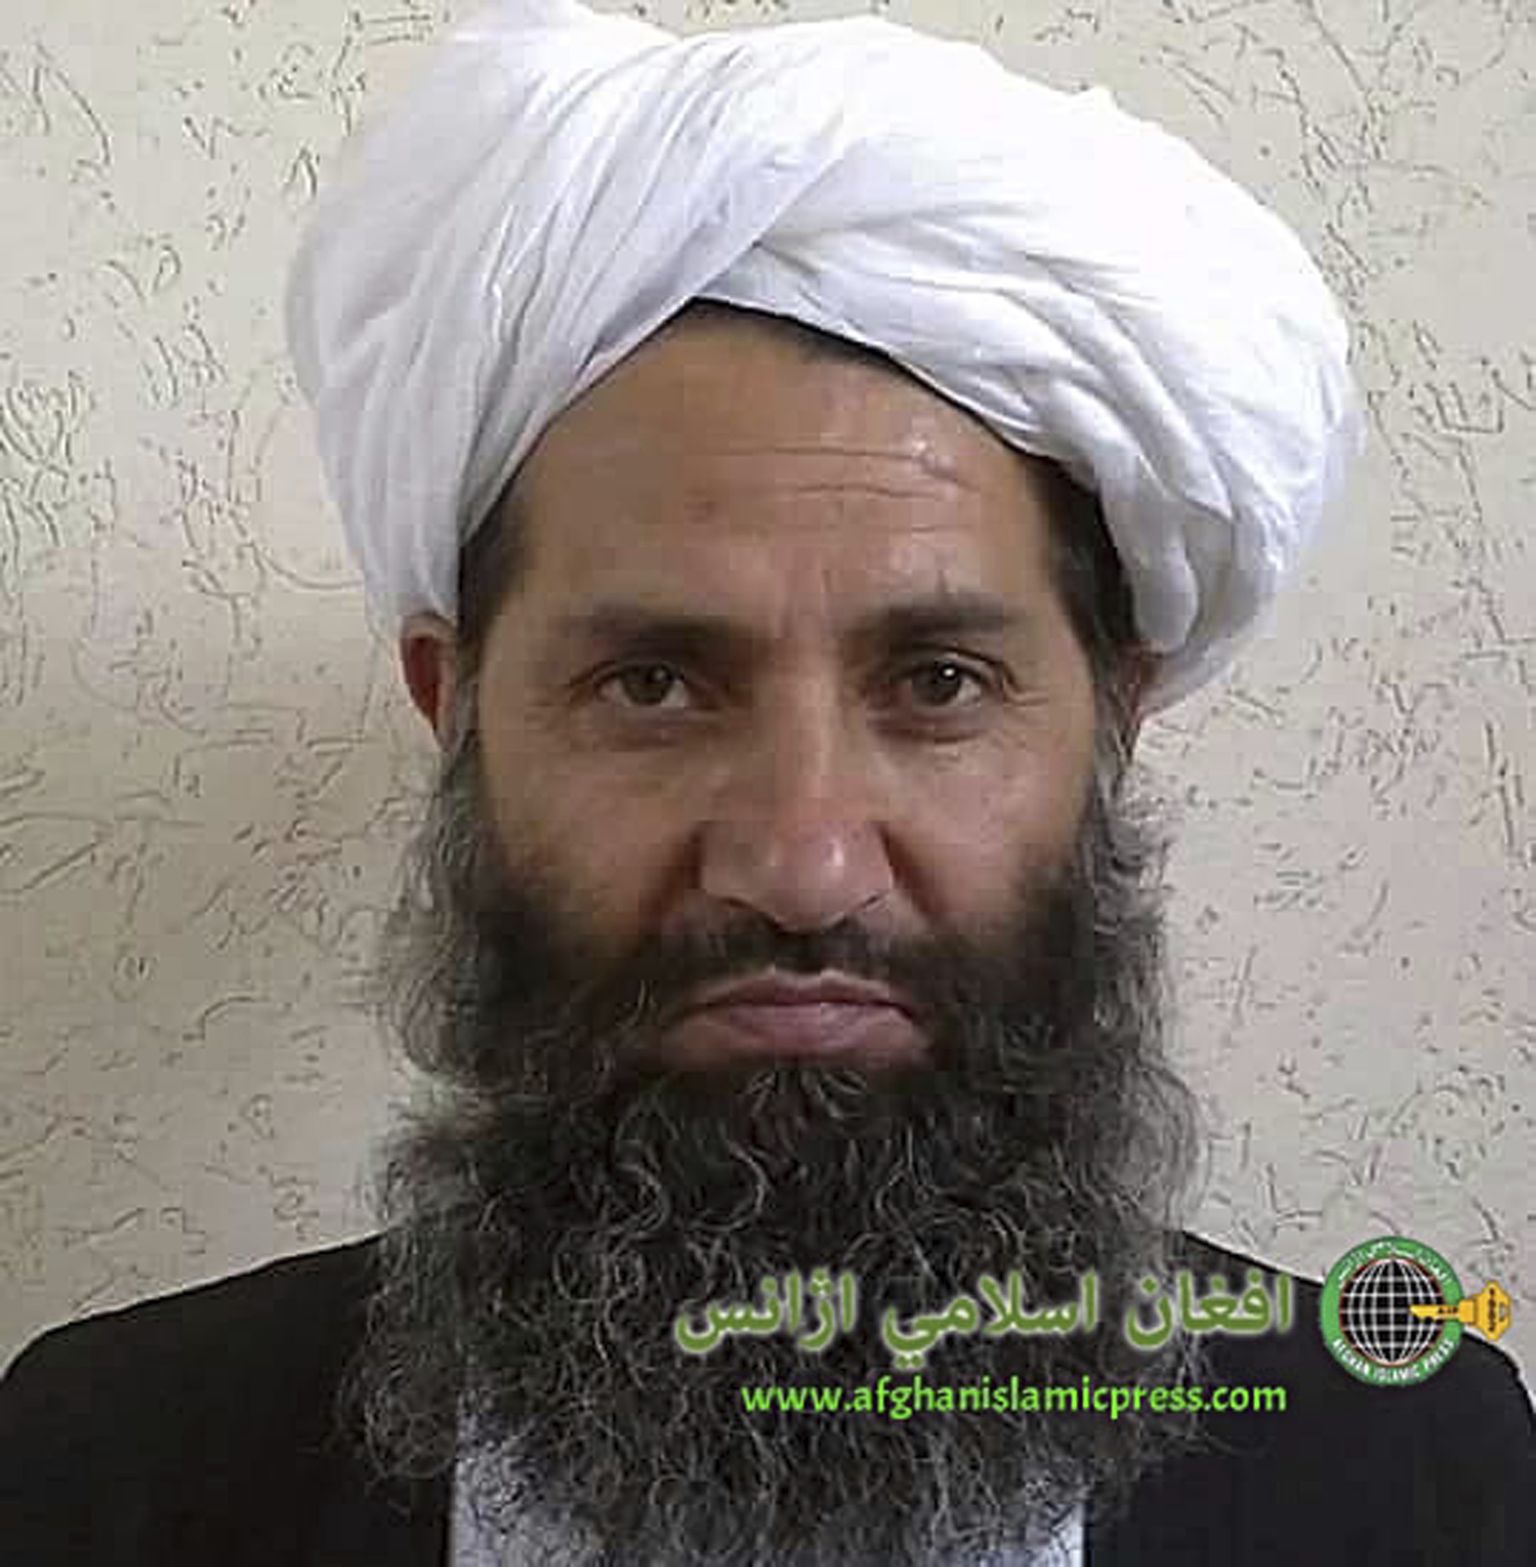 Talibani juht Mawlawi Hibatullah Akhundzada fotol, mille Afghan Islamic Press avaldas 2016